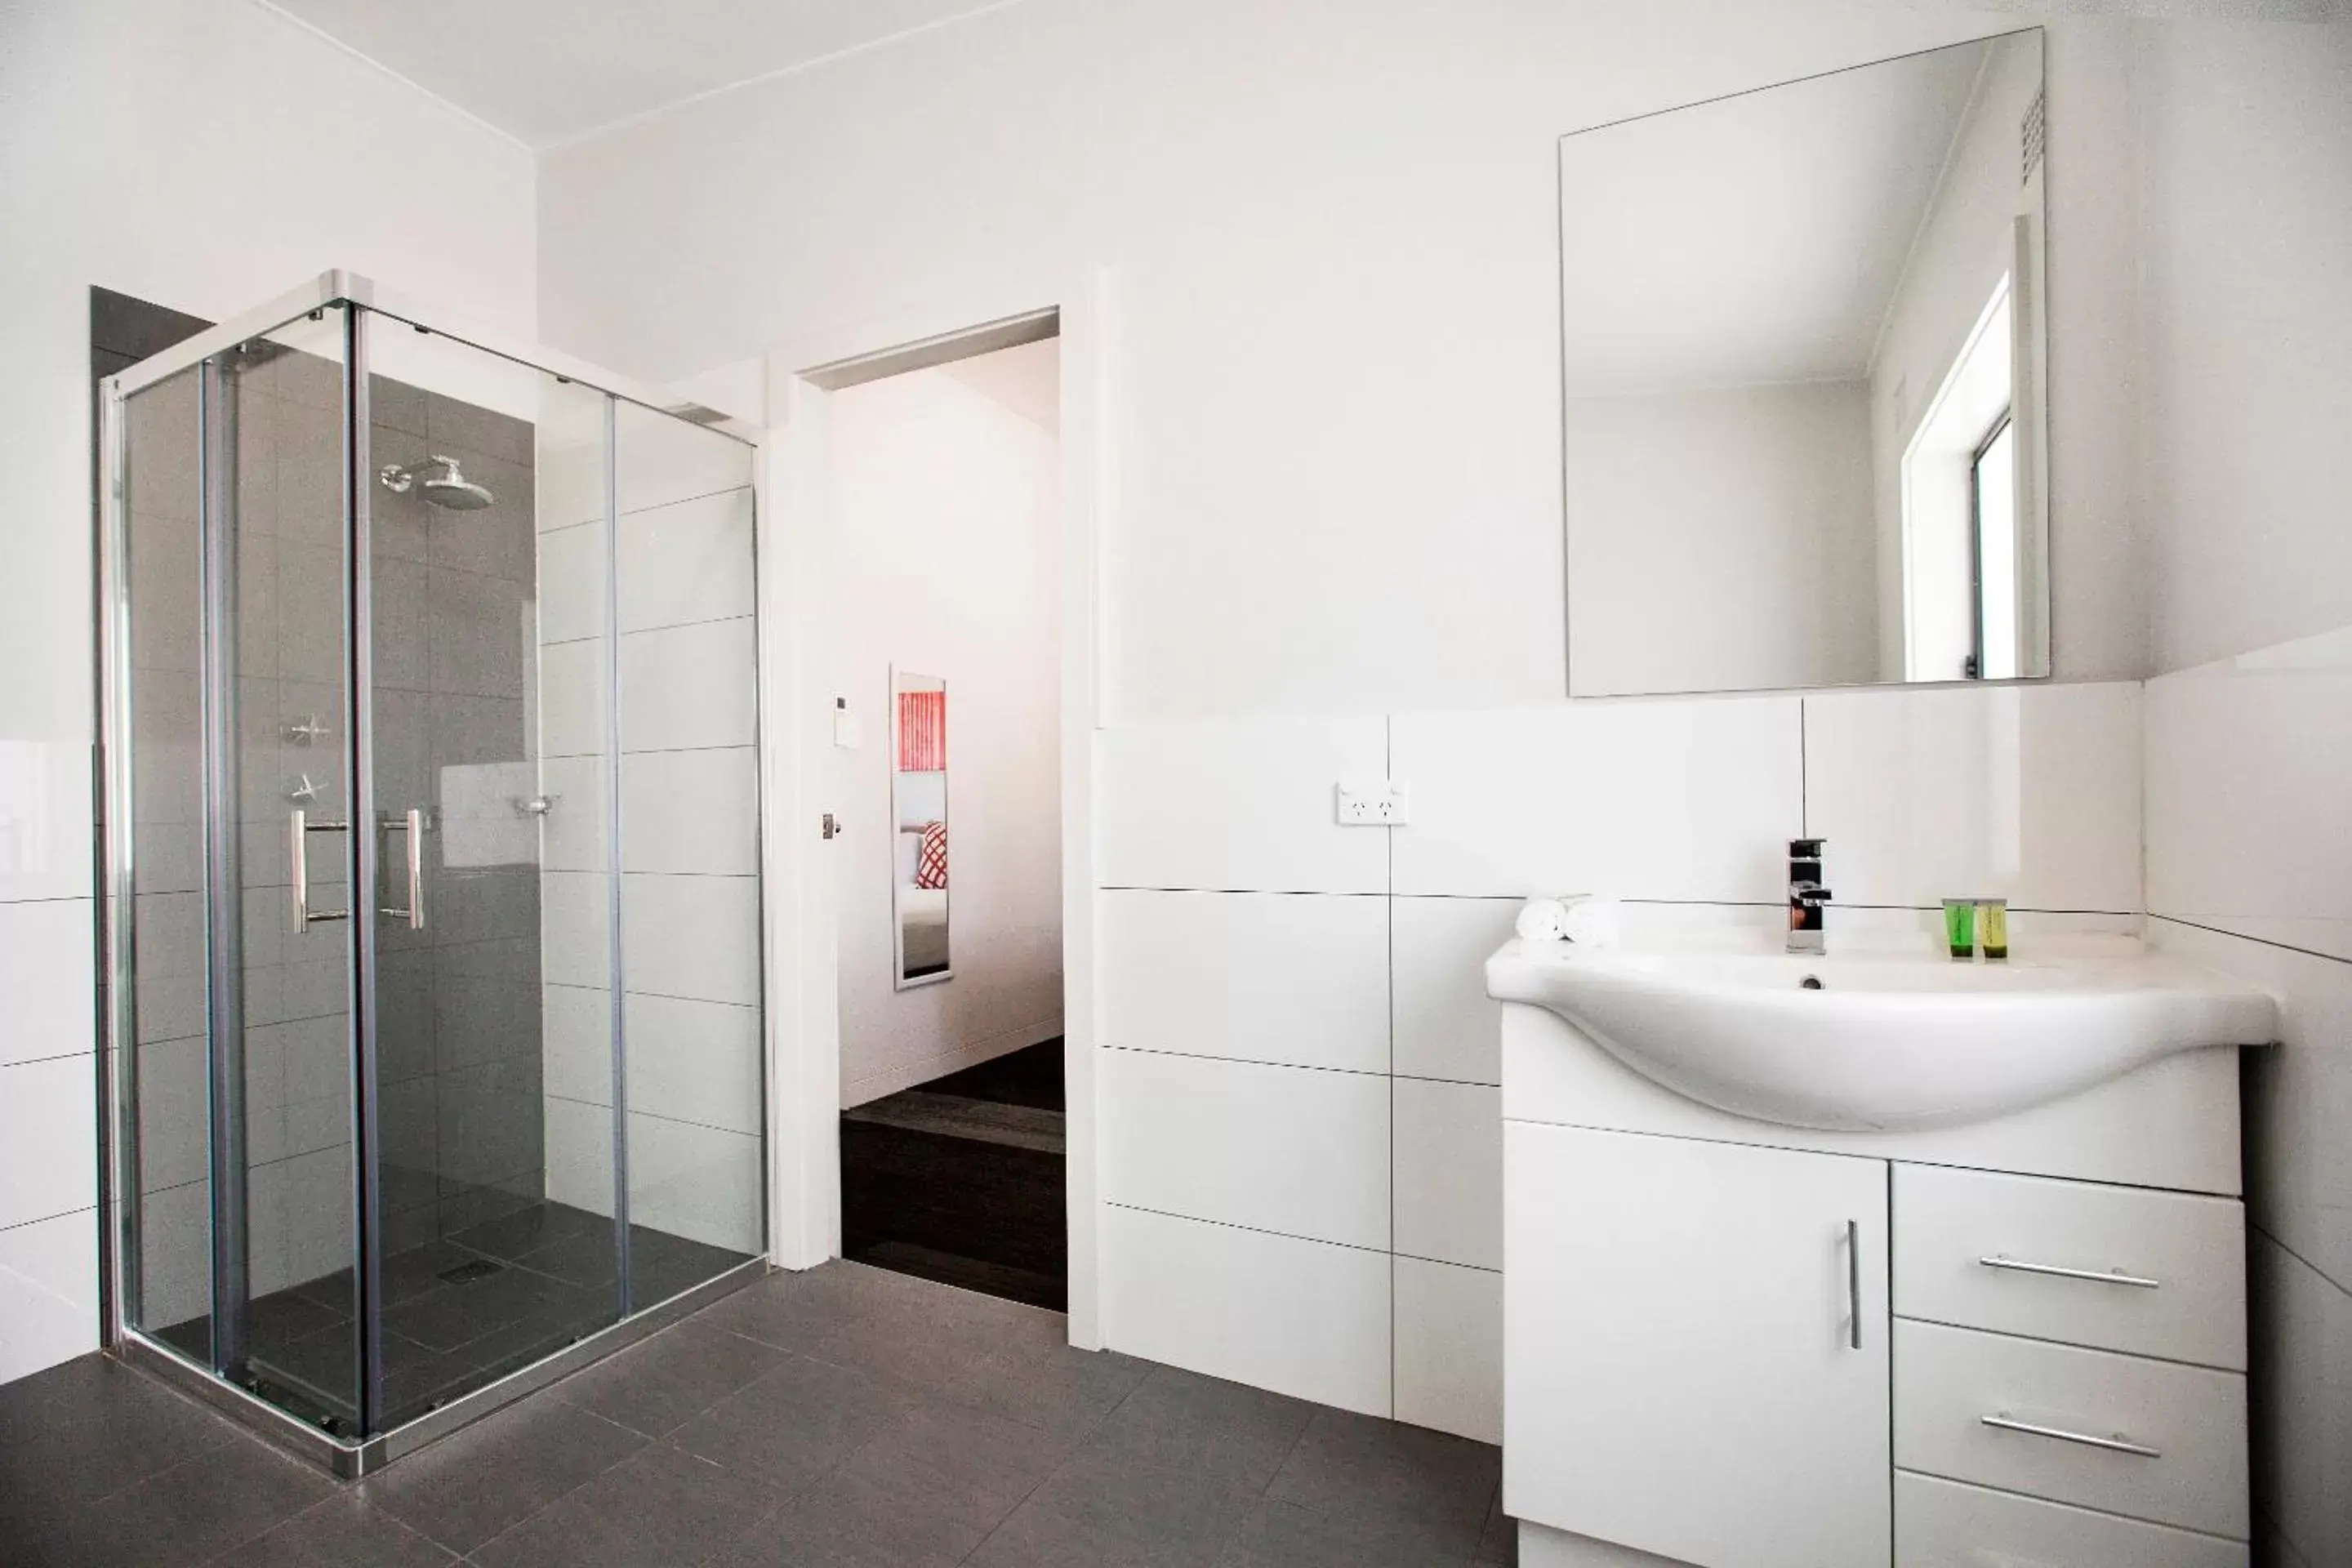 Area and facilities, Bathroom in Villawood Hotel